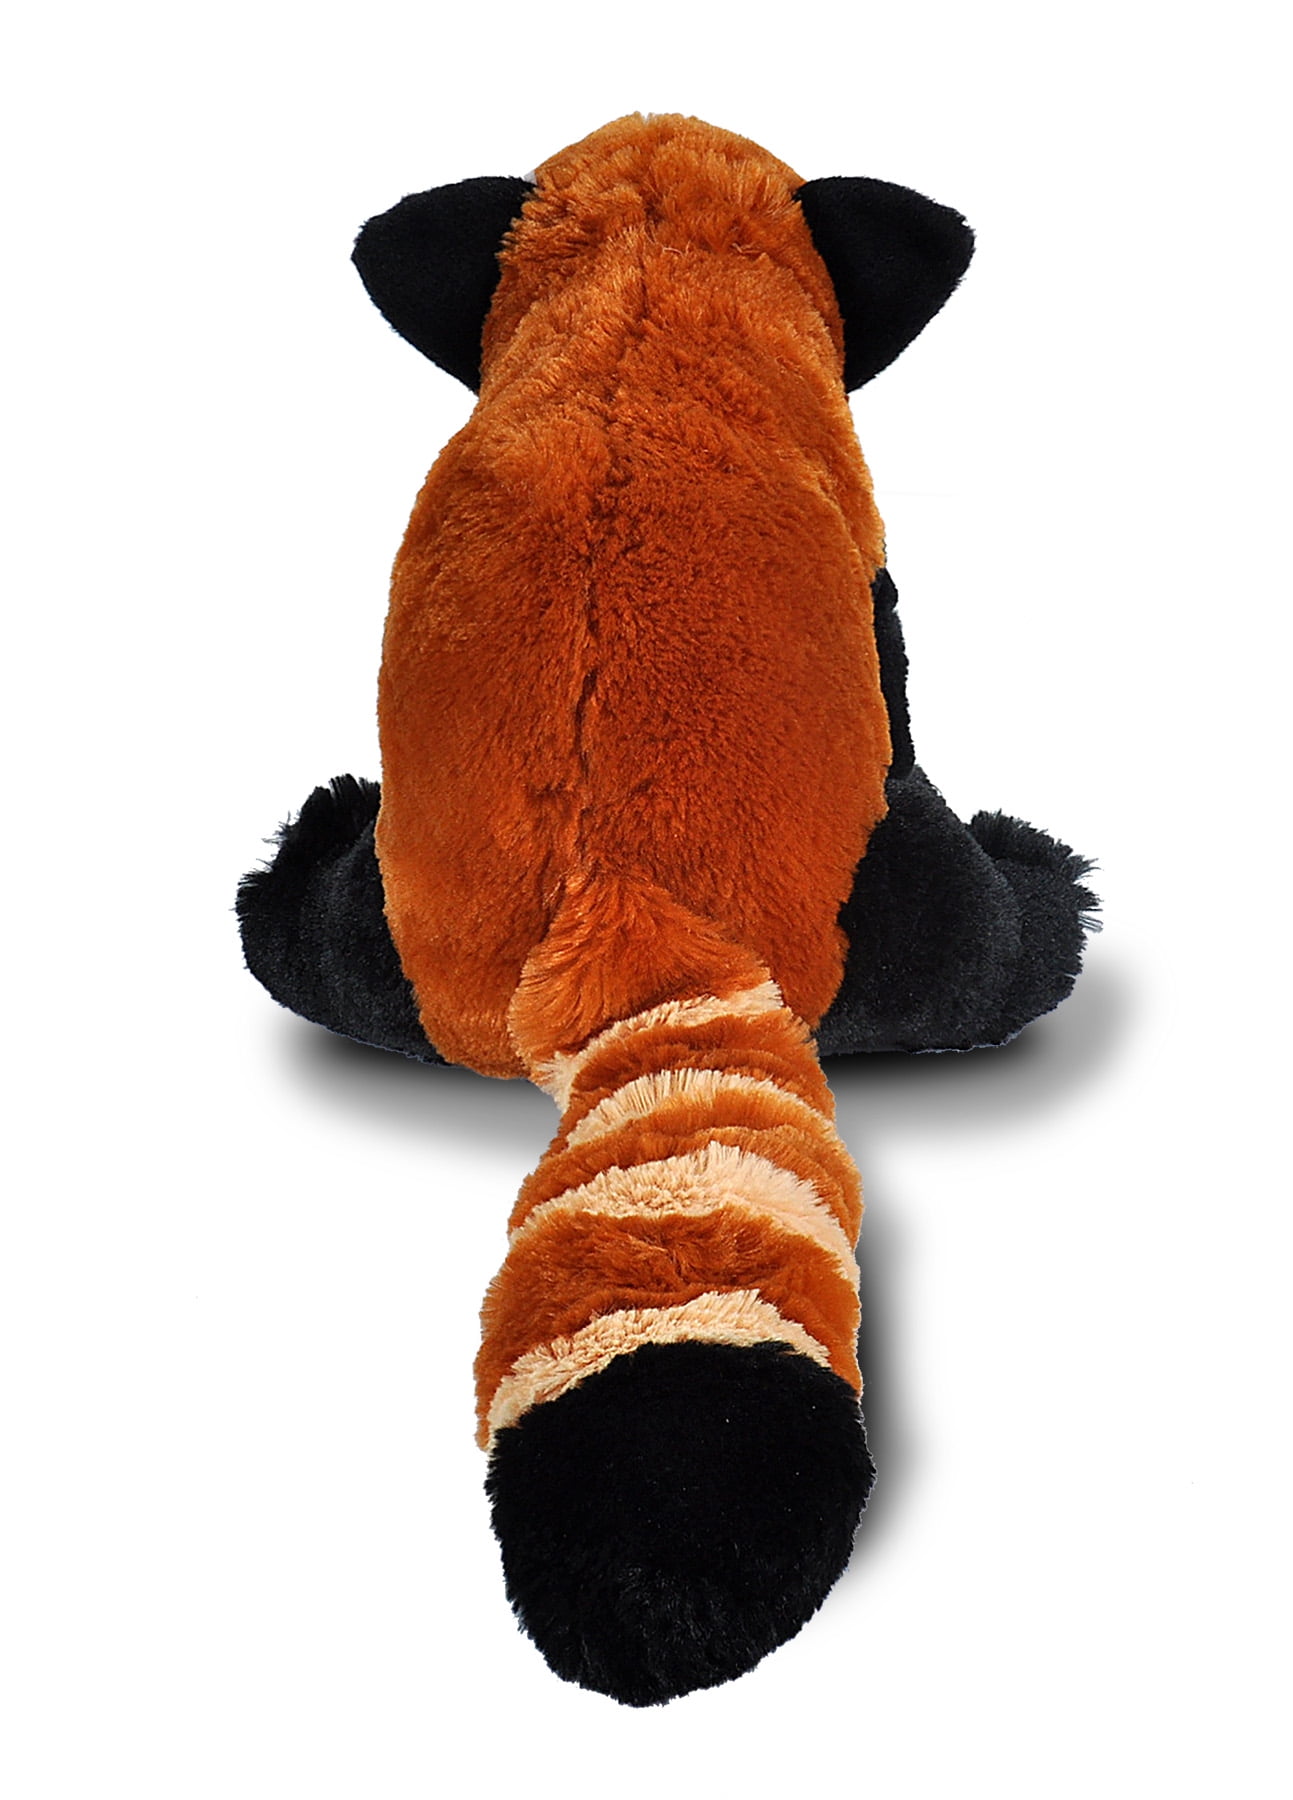 Kids Gifts 16 Inches Stuffed Animal Plush Toy Cuddlekins Red Panda Plush 